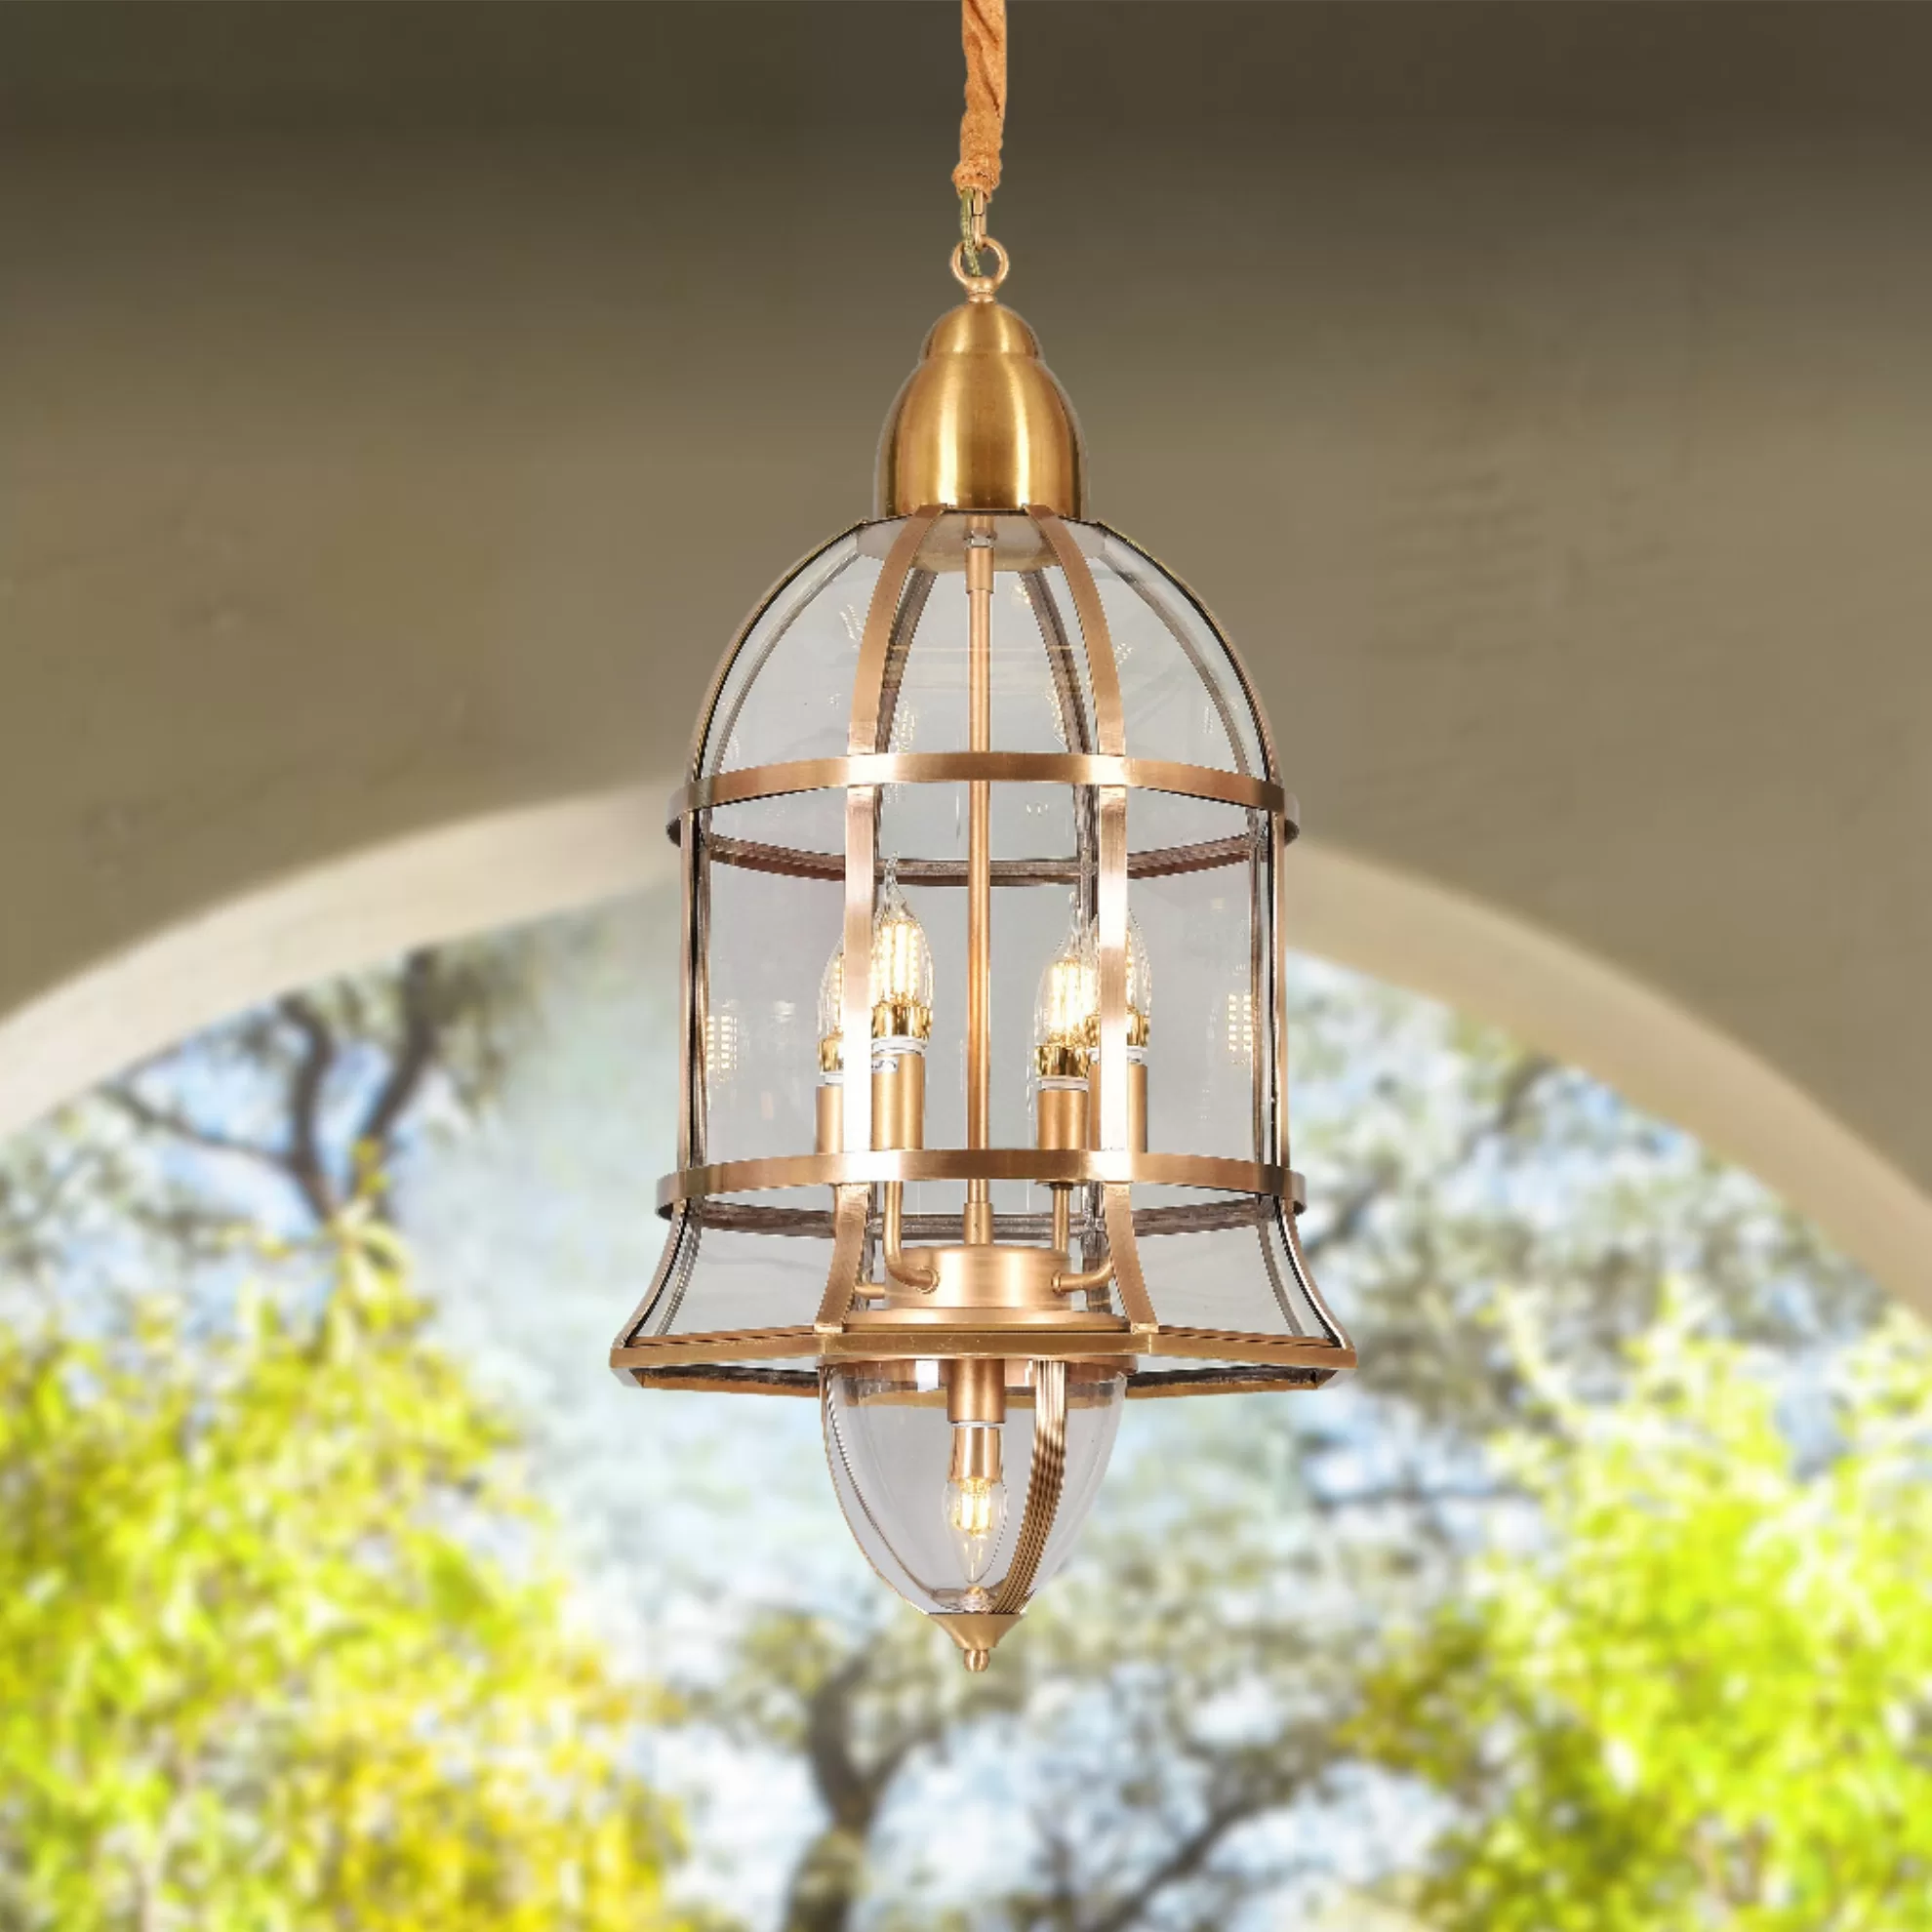 Outdoor Copper Hanging Lamps